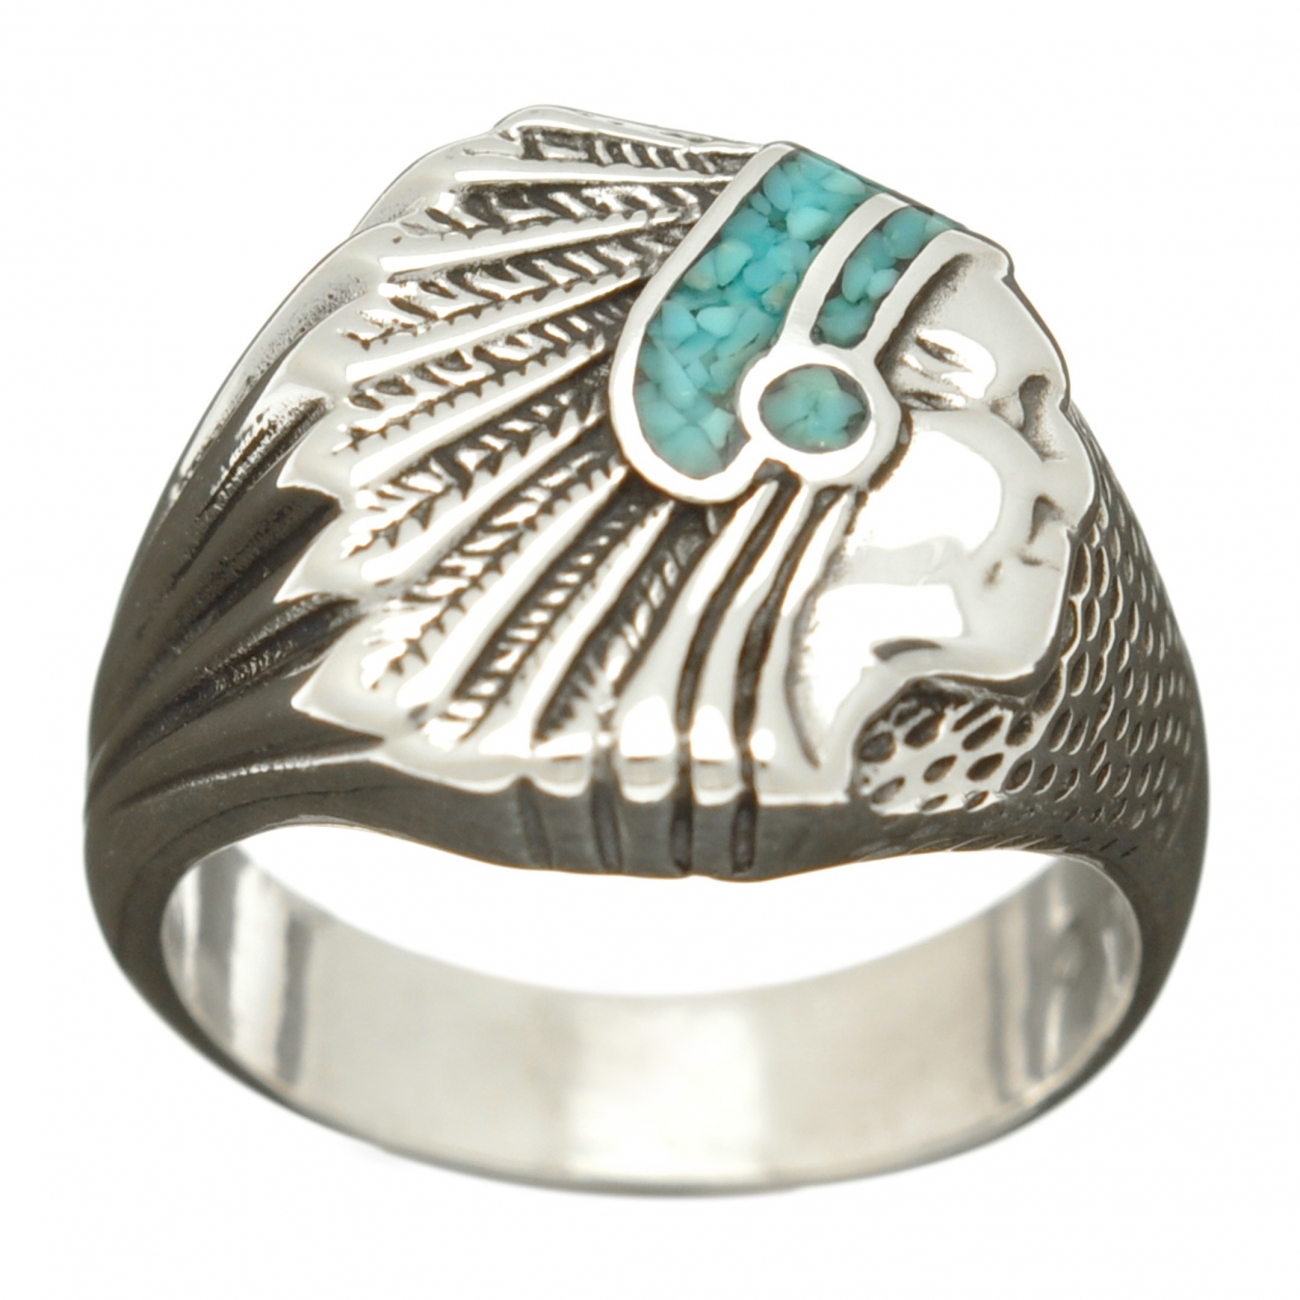 Harpo Paris classic ring R177GM Native American chief